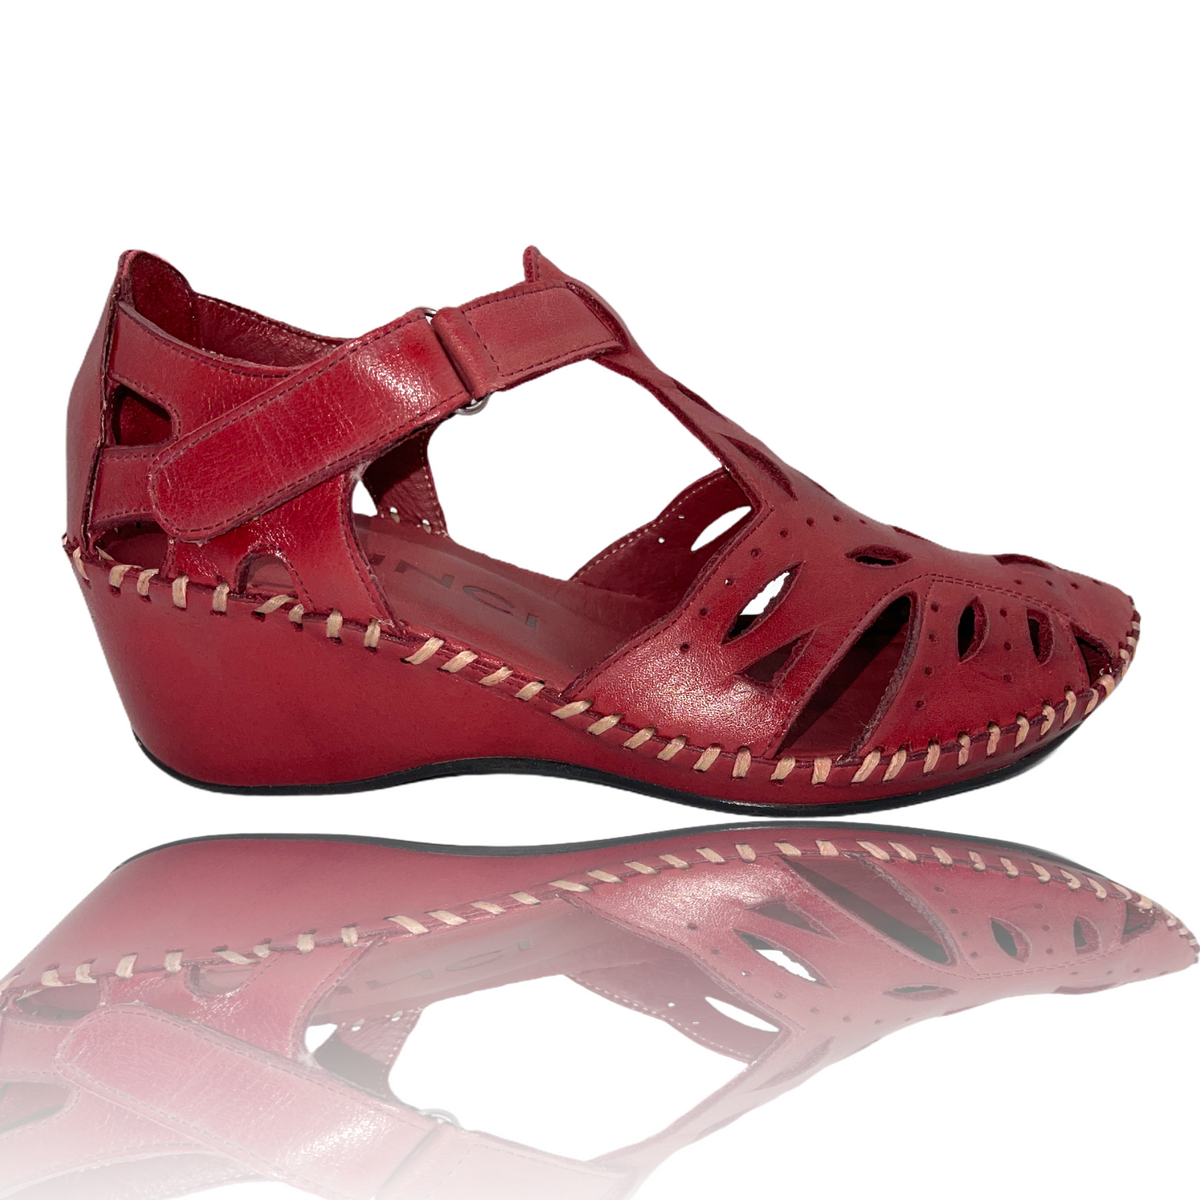 TONMAWR – Vinci Leather Shoes